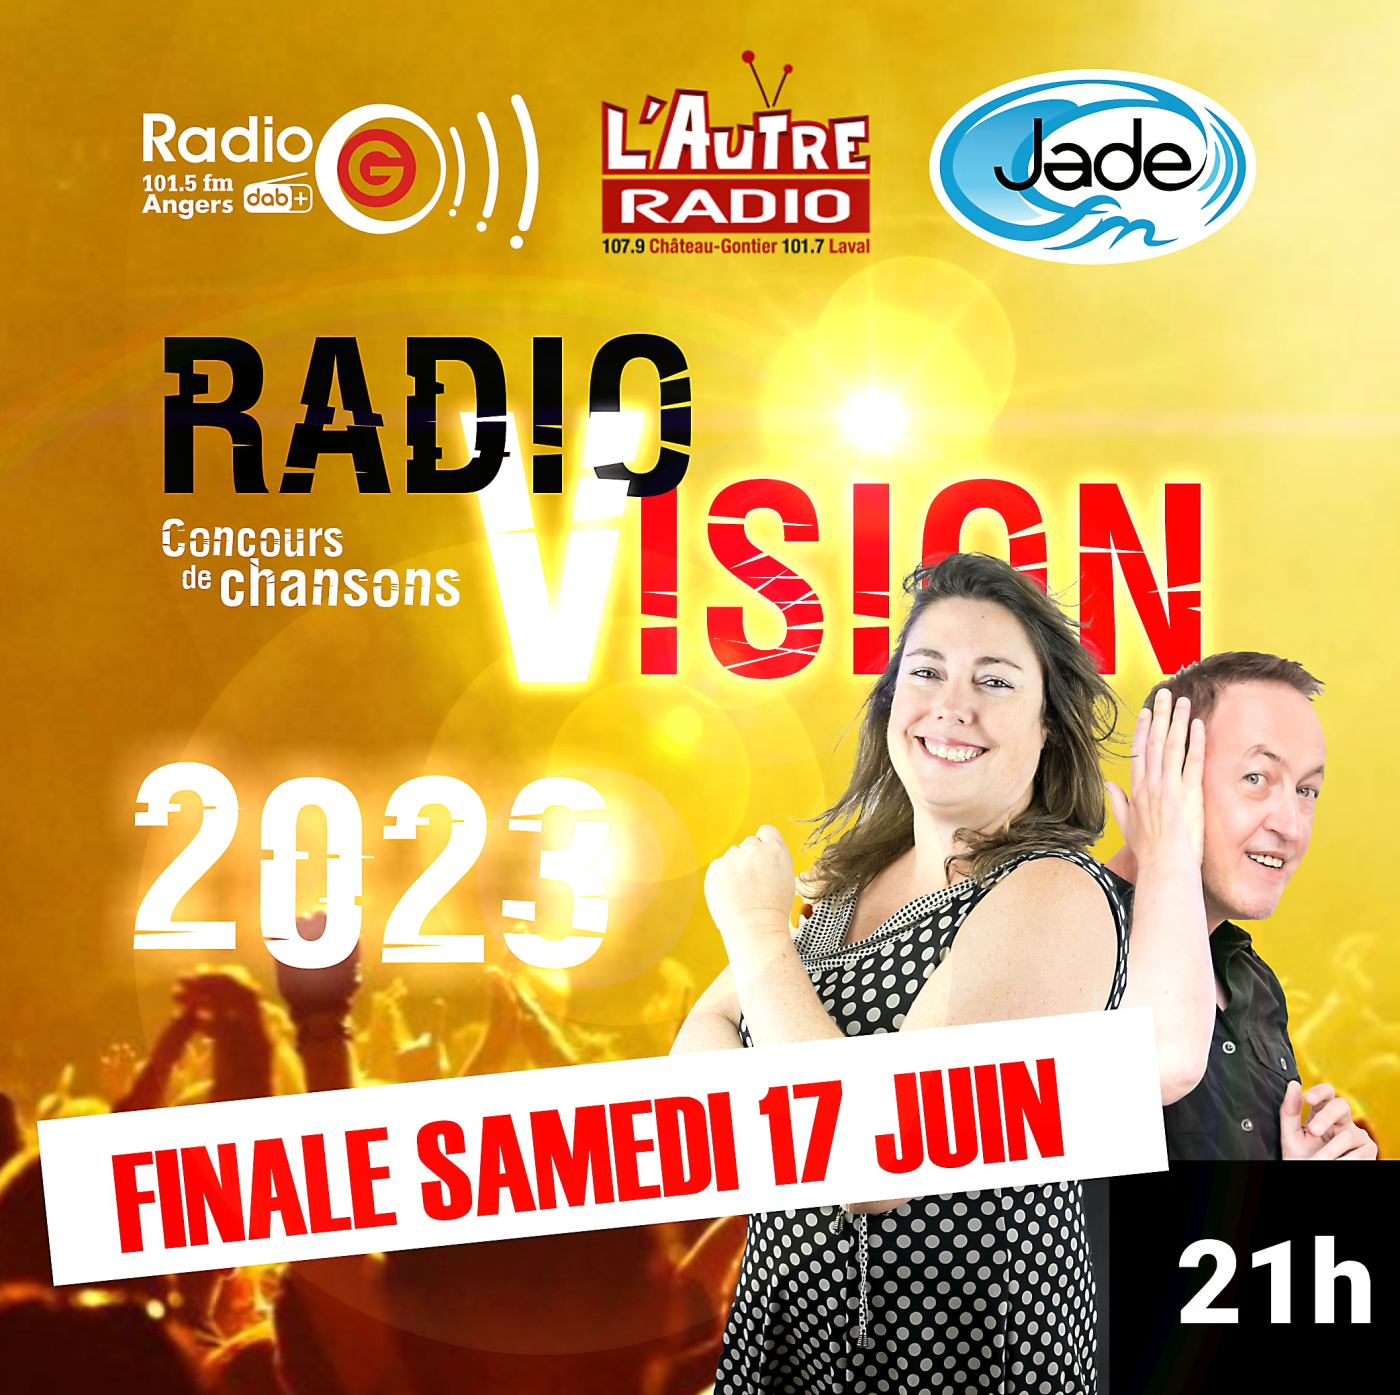 14 L'otre - Insatisfait RadioVision Finalistes 2023 14 L'otre - Insatisfait